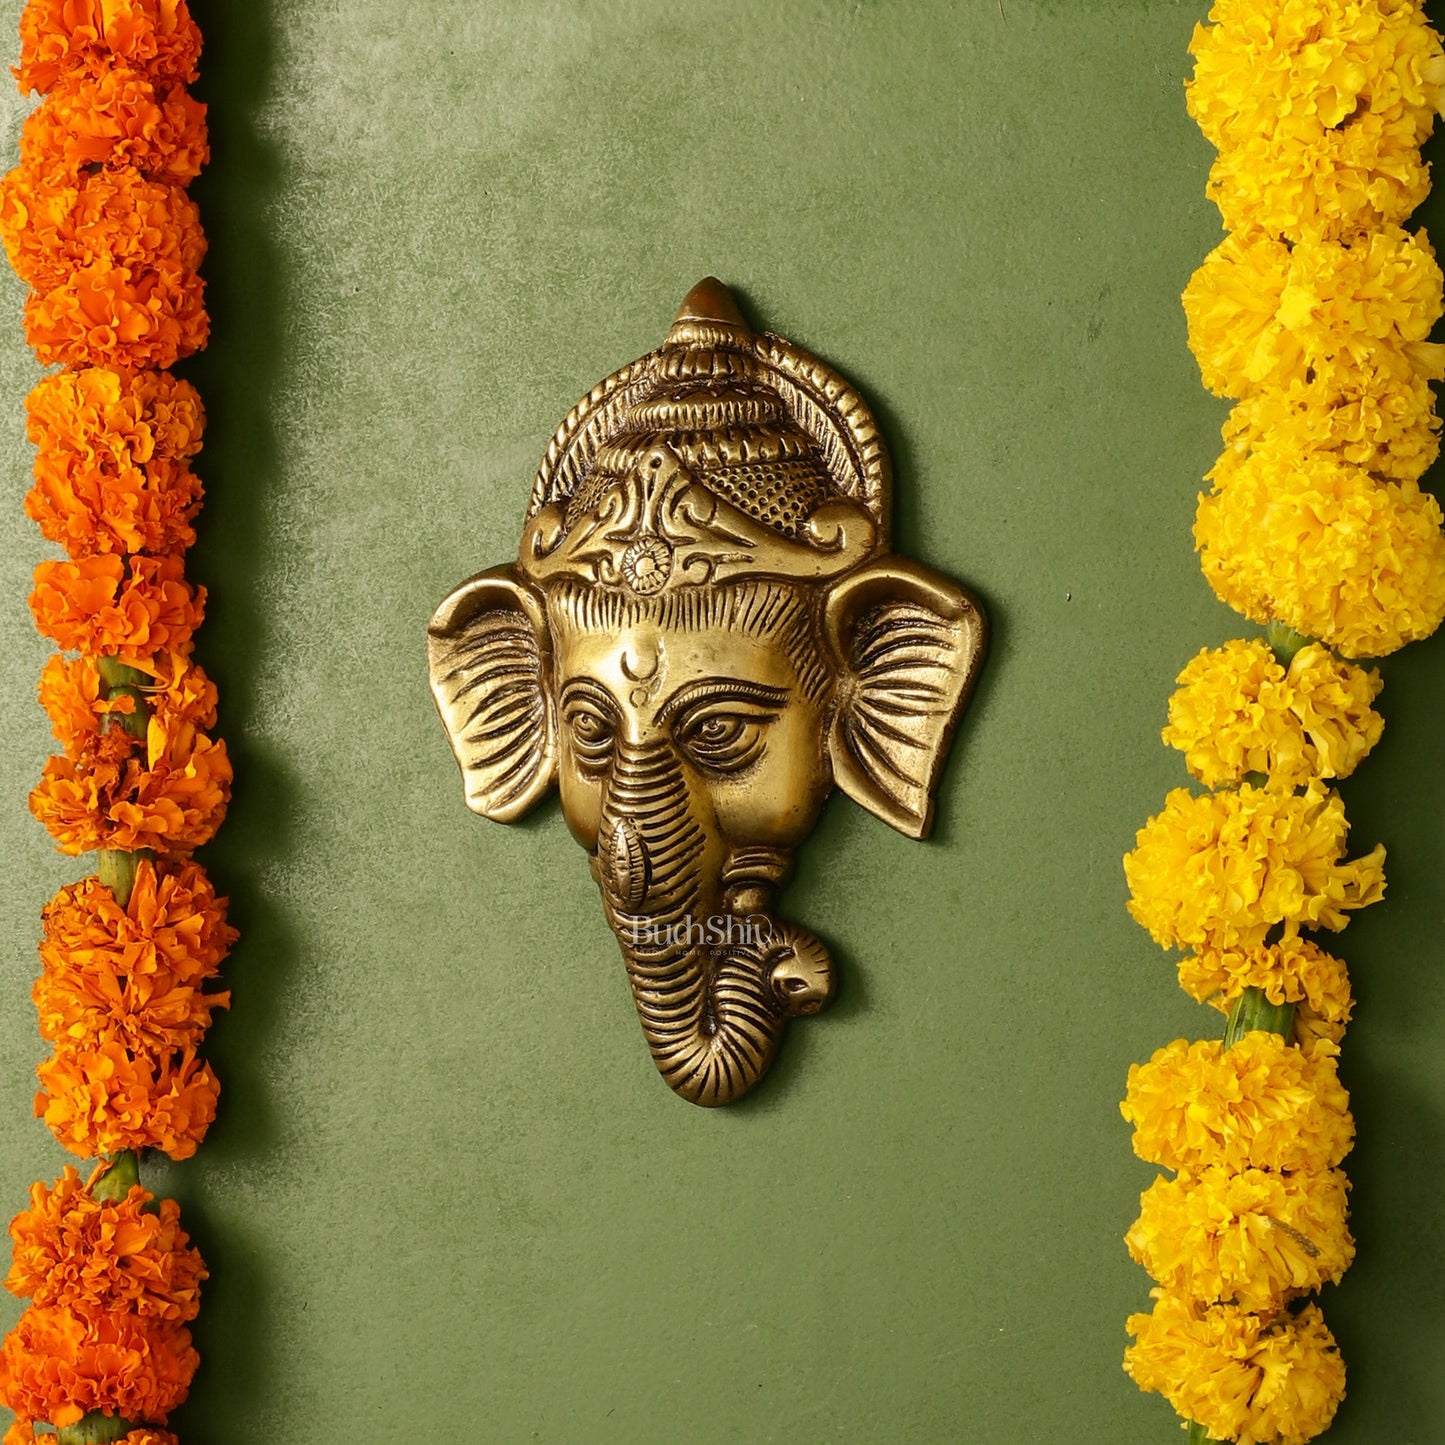 Brass Ganesha Wall Hanging - 6 x 4.5 inch - Budhshiv.com